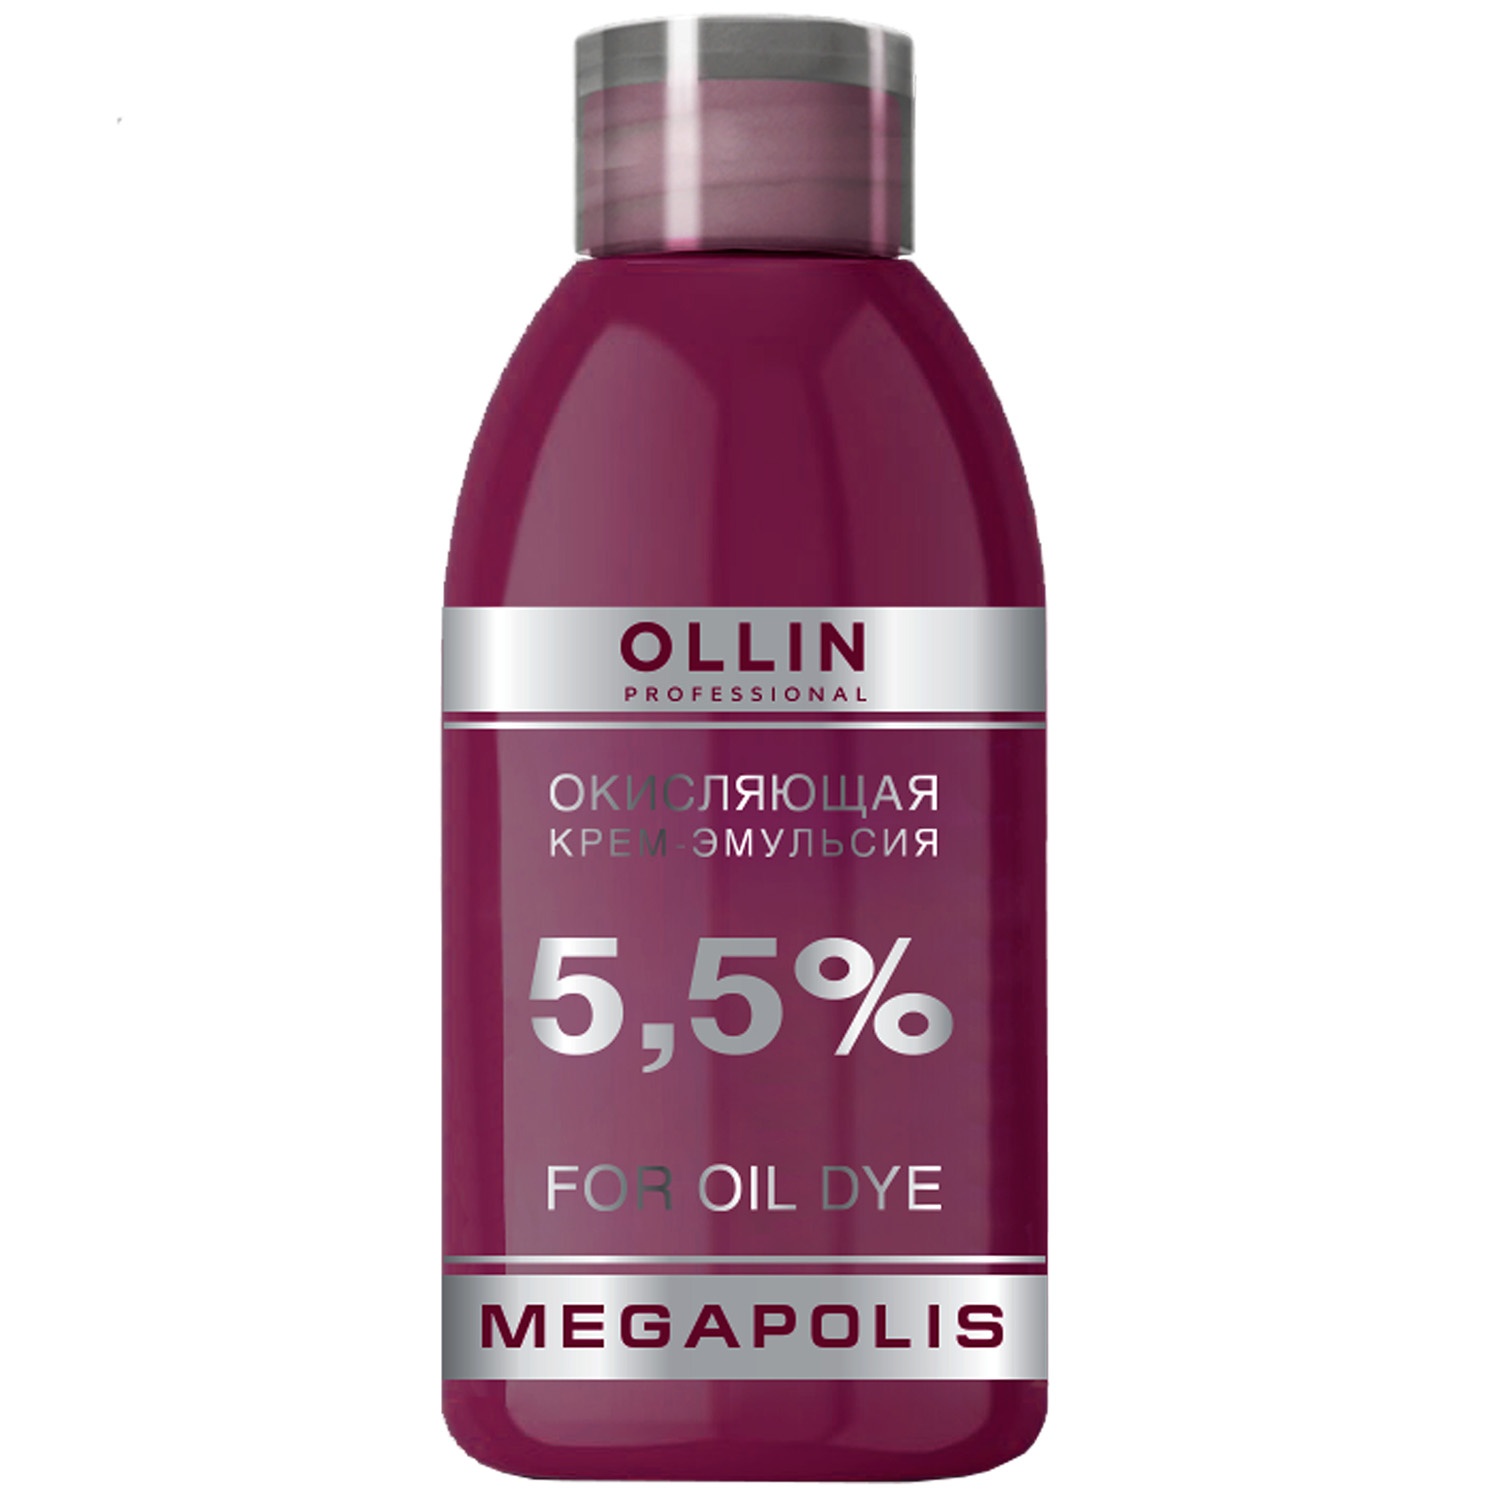 Ollin Professional Окисляющая крем-эмульсия 5,5%, 75 мл (Ollin Professional, Megapolis)